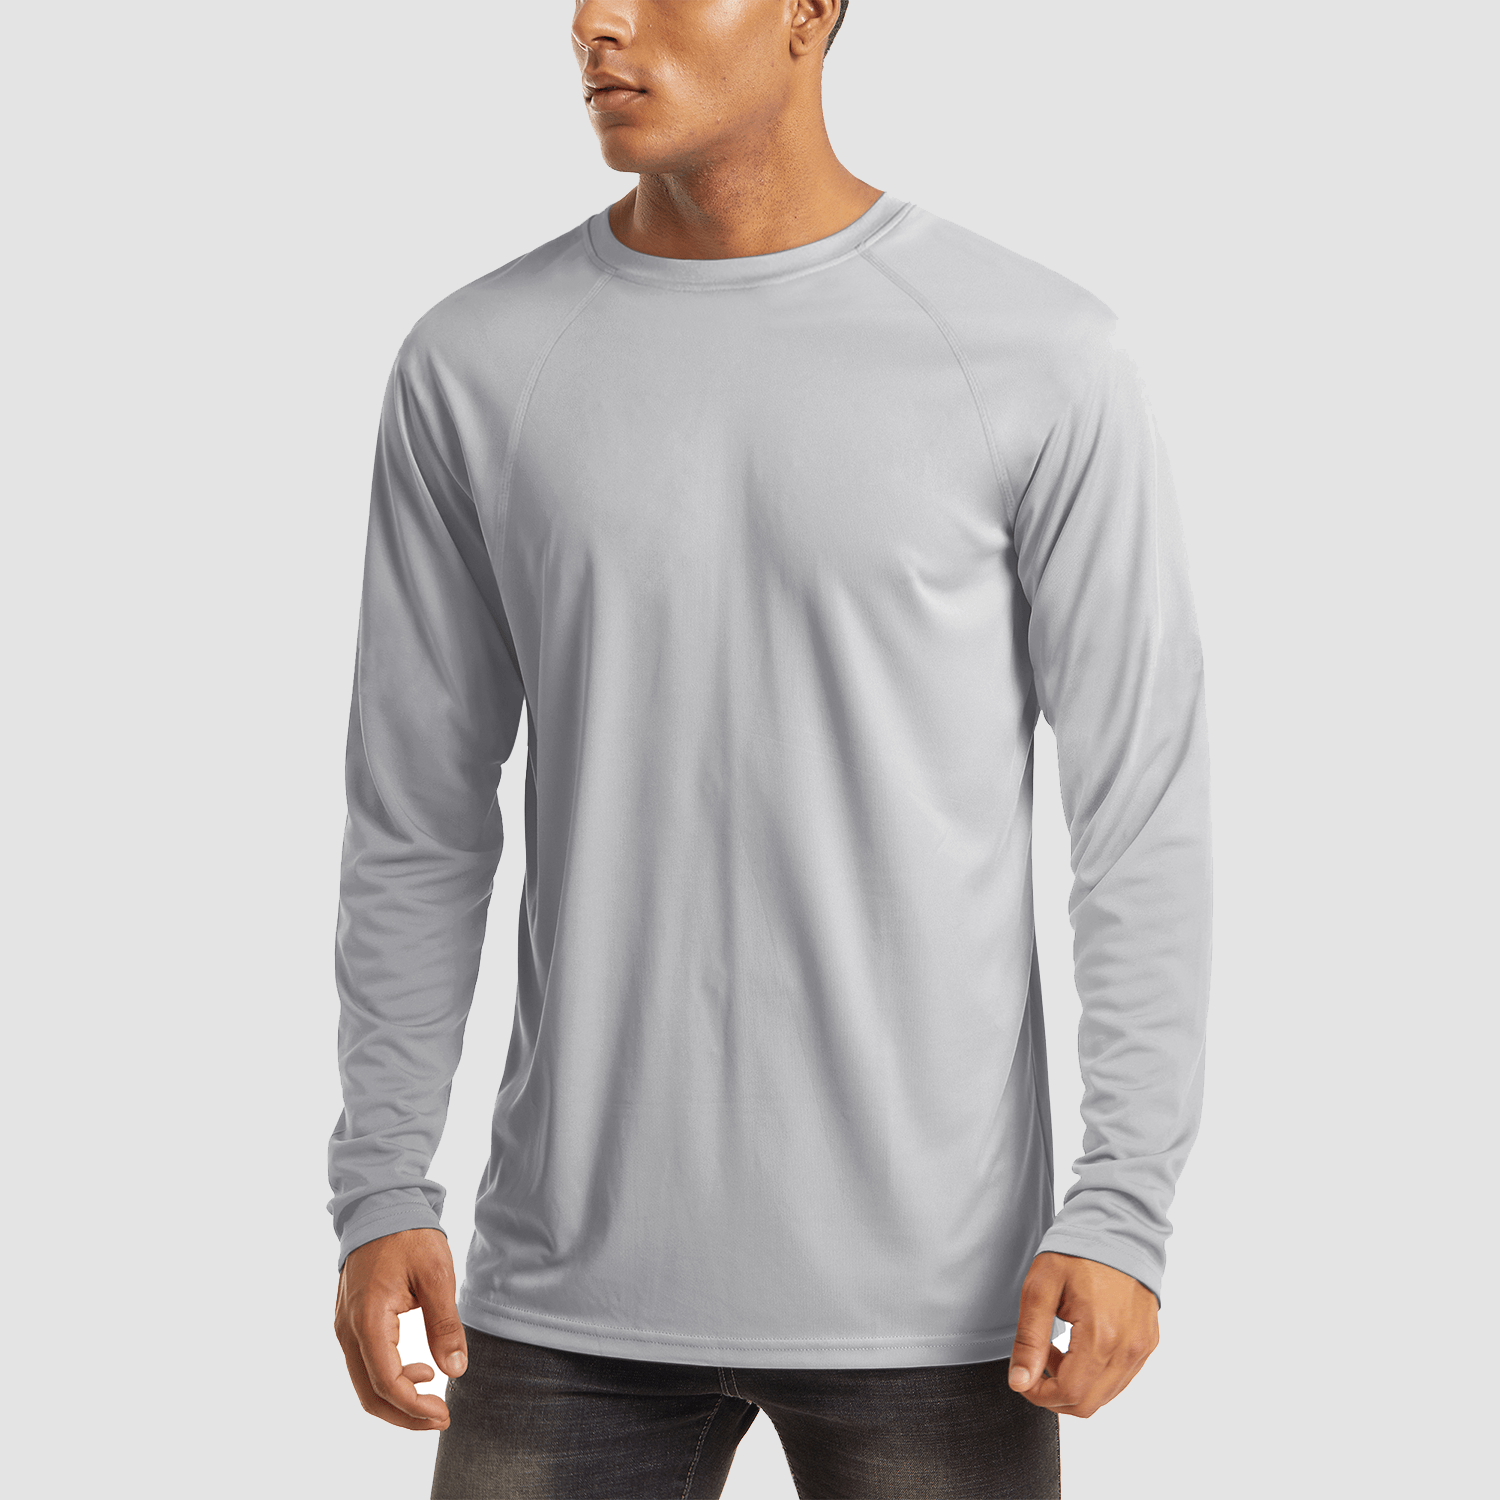 【Buy 4 Get 4th Free】Men's Long Sleeve Hooded Shirt UPF 50+ Athletic Shirt, White / S